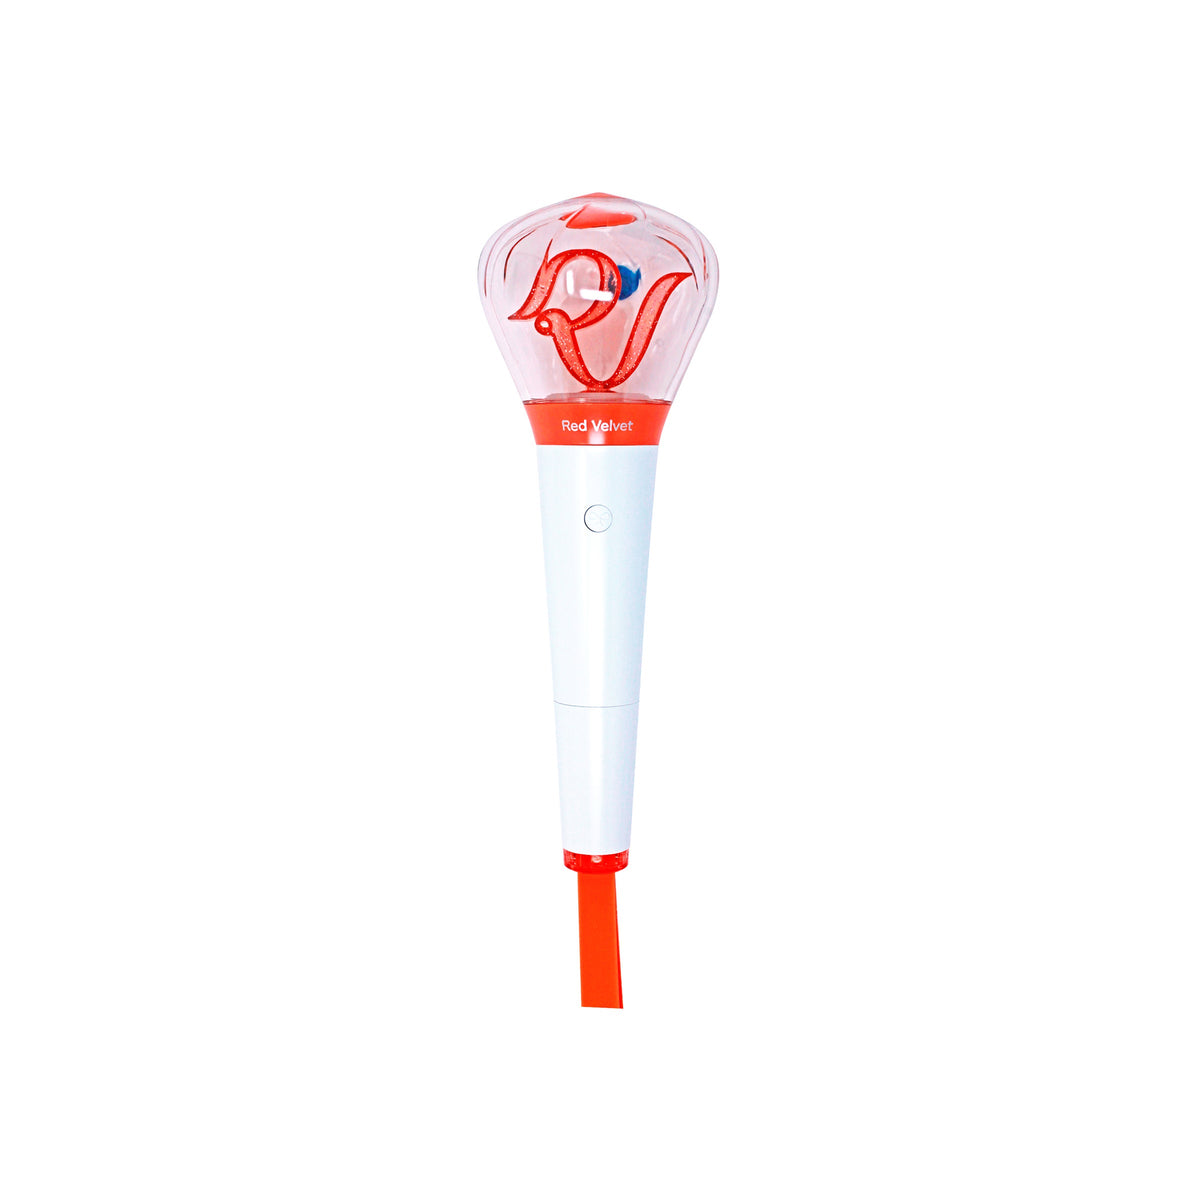 Red Velvet Official Light Stick Main Product Image - Image 3